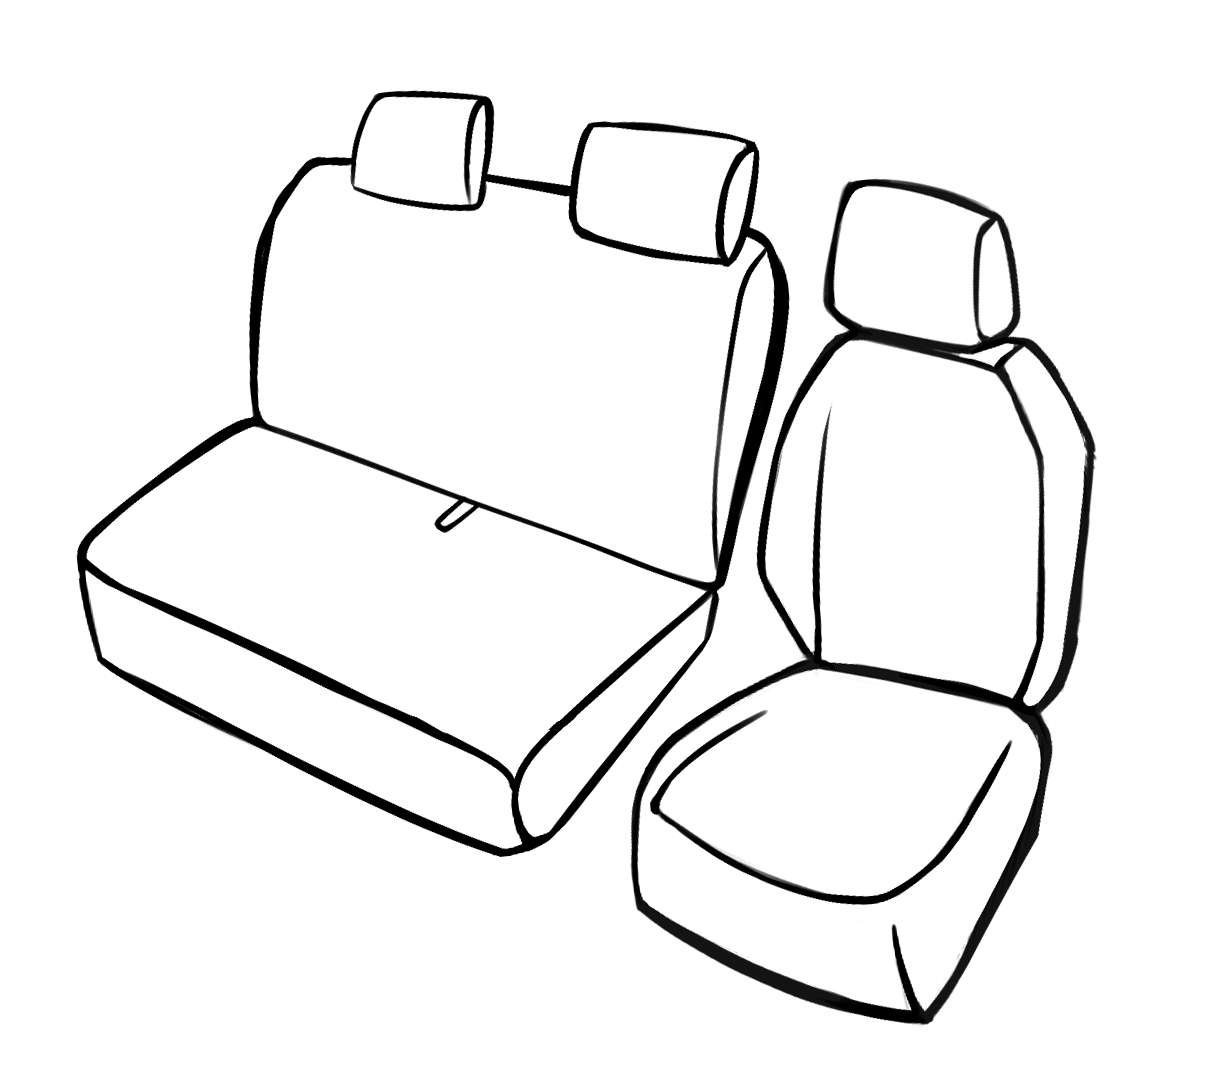 Transporter Coprisedili in tessuto per Opel Vivaro, Renault Traffic, Nissan Primastar, sedile singolo e doppio